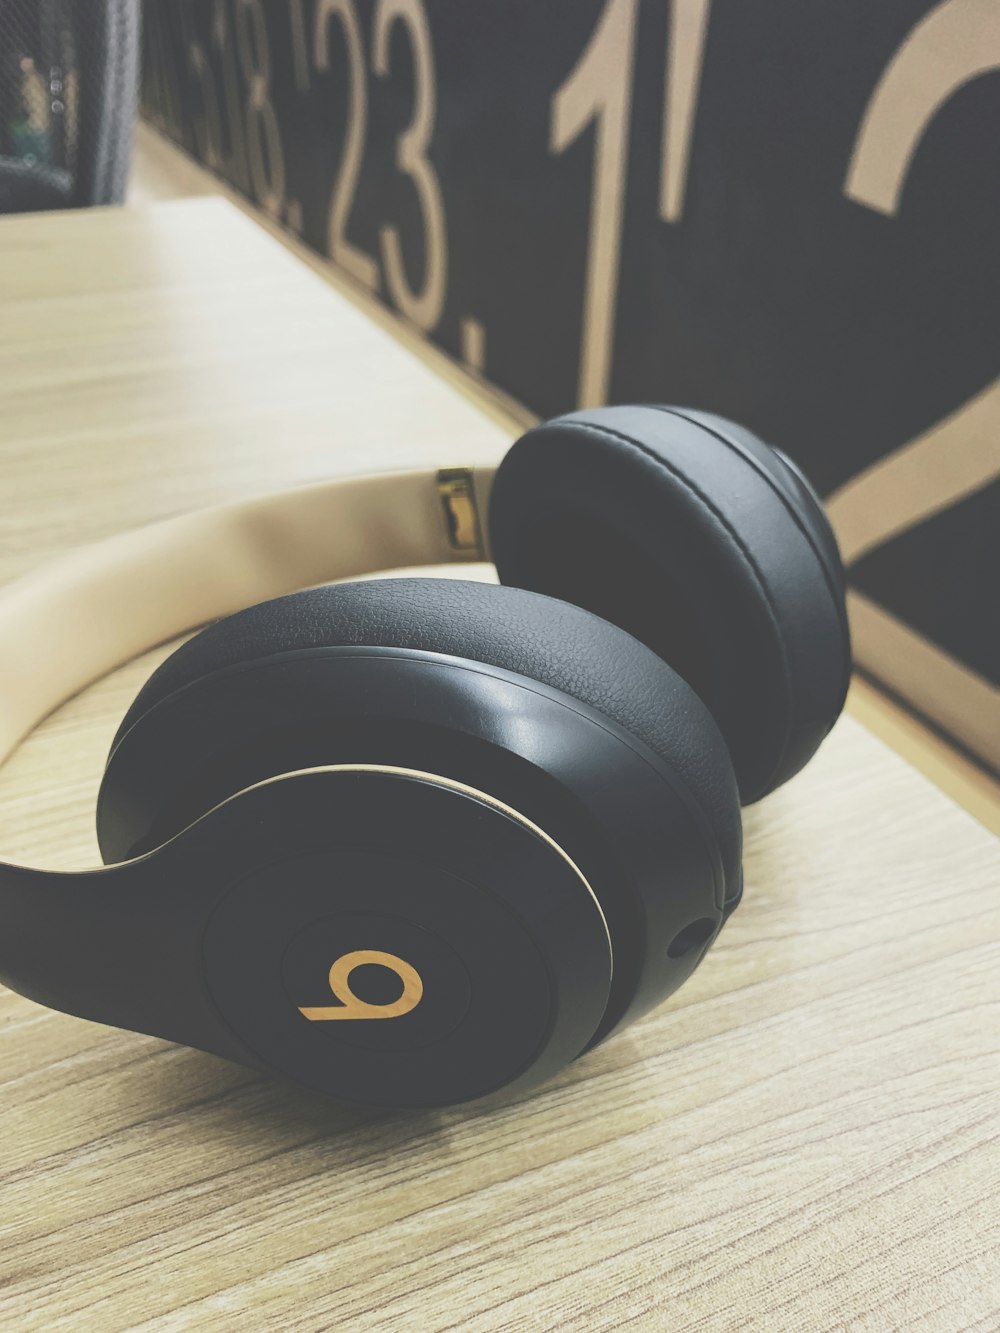 black Beats By Dr. Dre wireless headphones